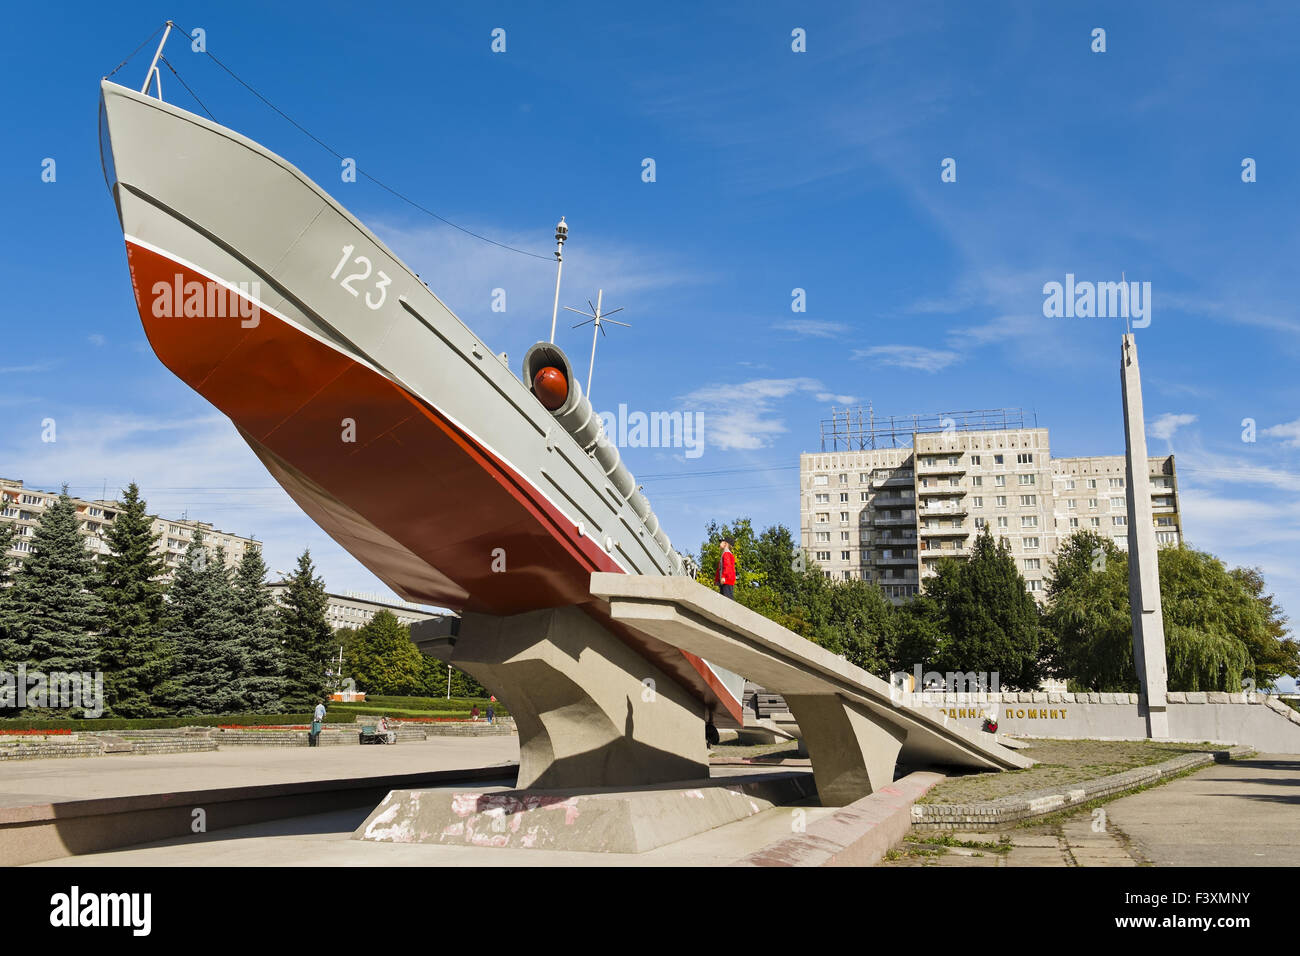 Torpedo boat at memorial, Kaliningrad, Russia Stock Photo